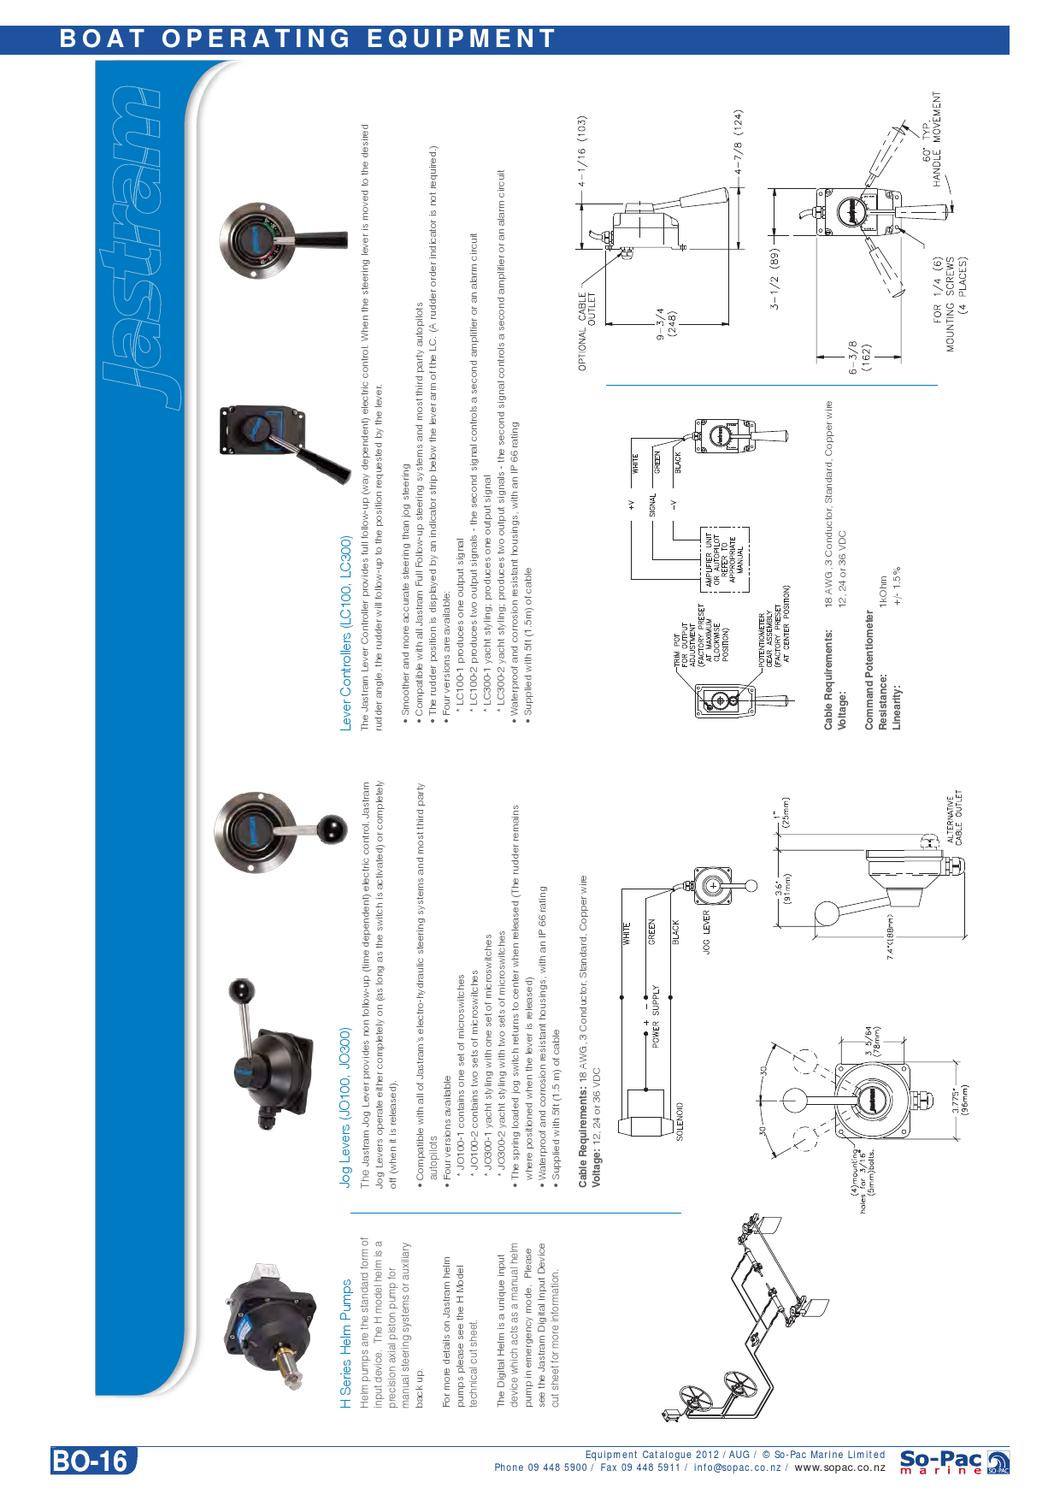 Jog Lever Steering Wiring Diagram so-pac Marine 2012 Equipment Catalogue by so-pac Marine - issuu